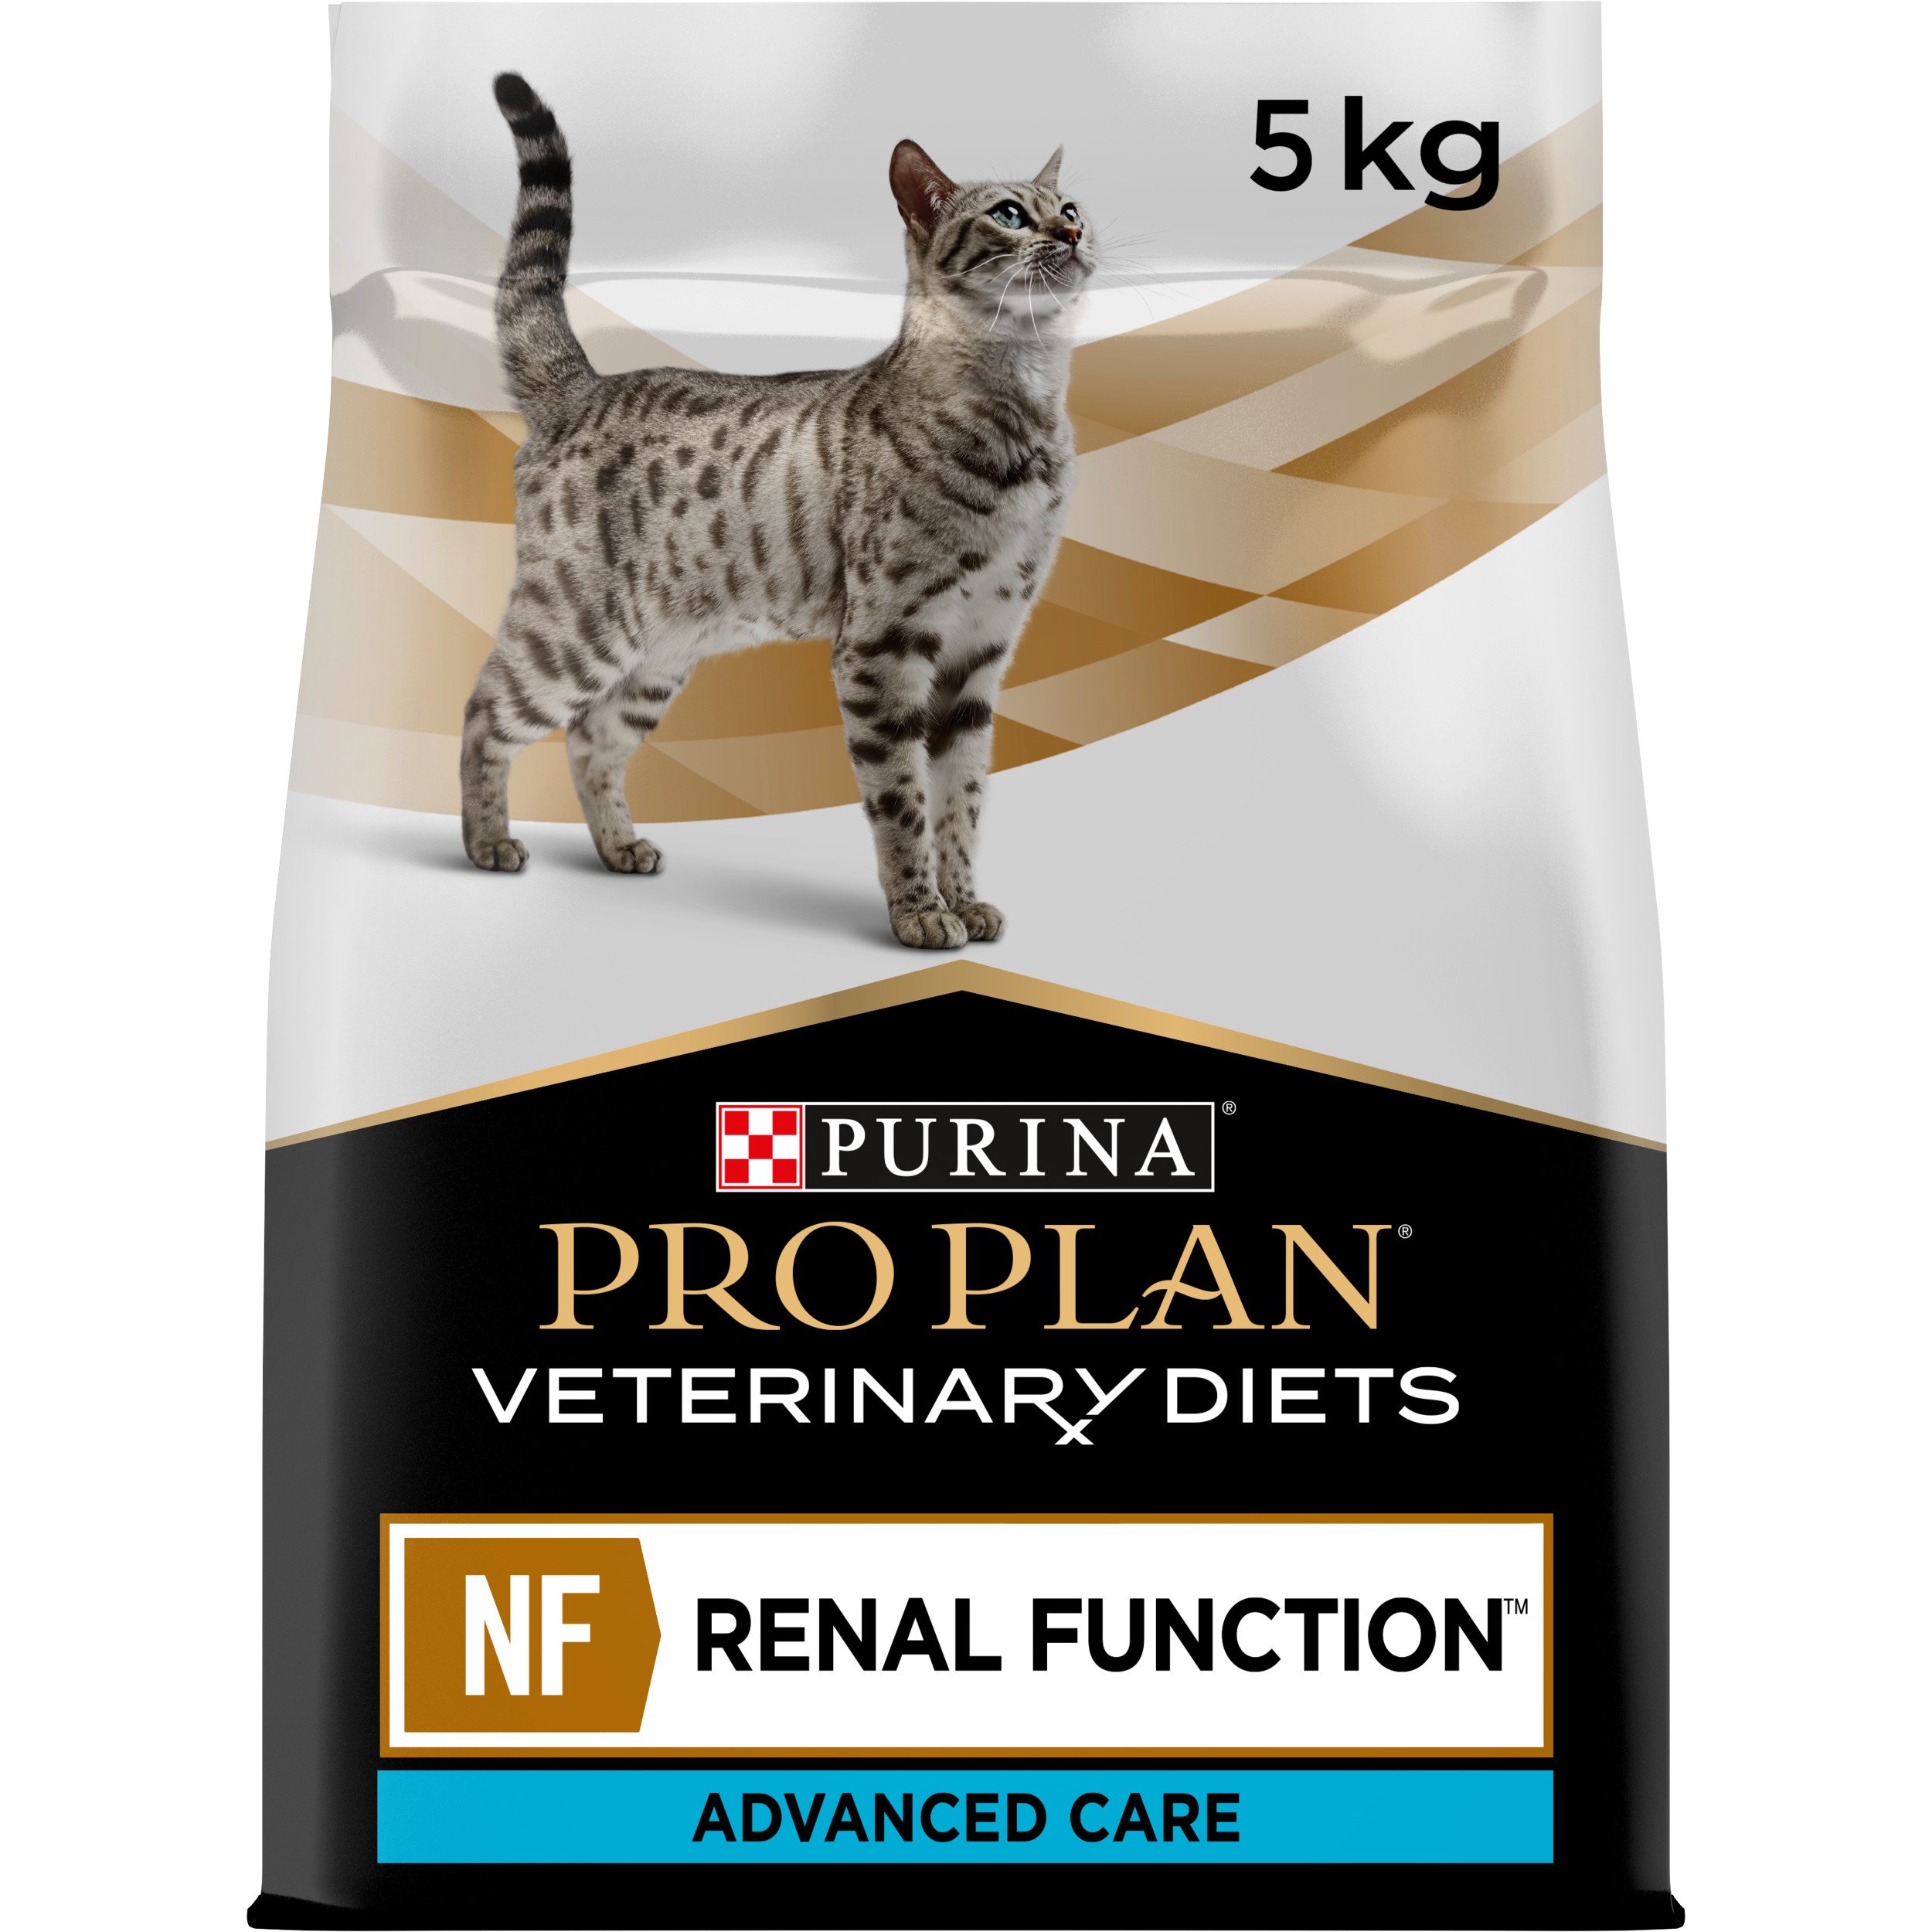 Сухой корм для котов при заболеваниях почек Purina Pro Plan Veterinary Diets NF Renal Function, 5 кг - фото 1